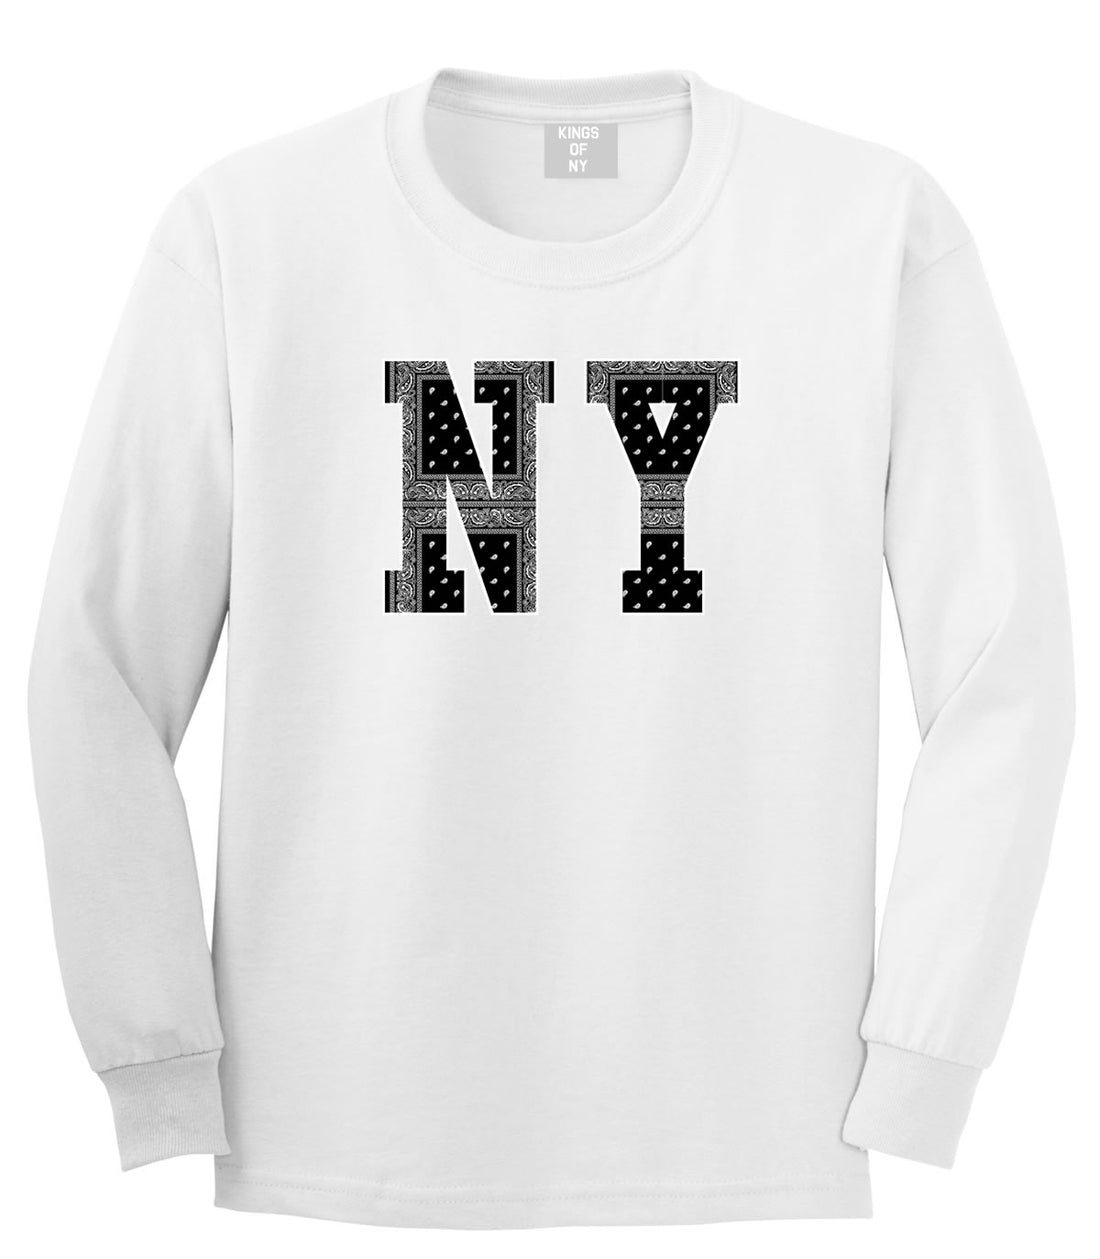 New York Bandana NYC Black by Kings Of NY Gang Flag Long Sleeve T-Shirt in White by Kings Of NY